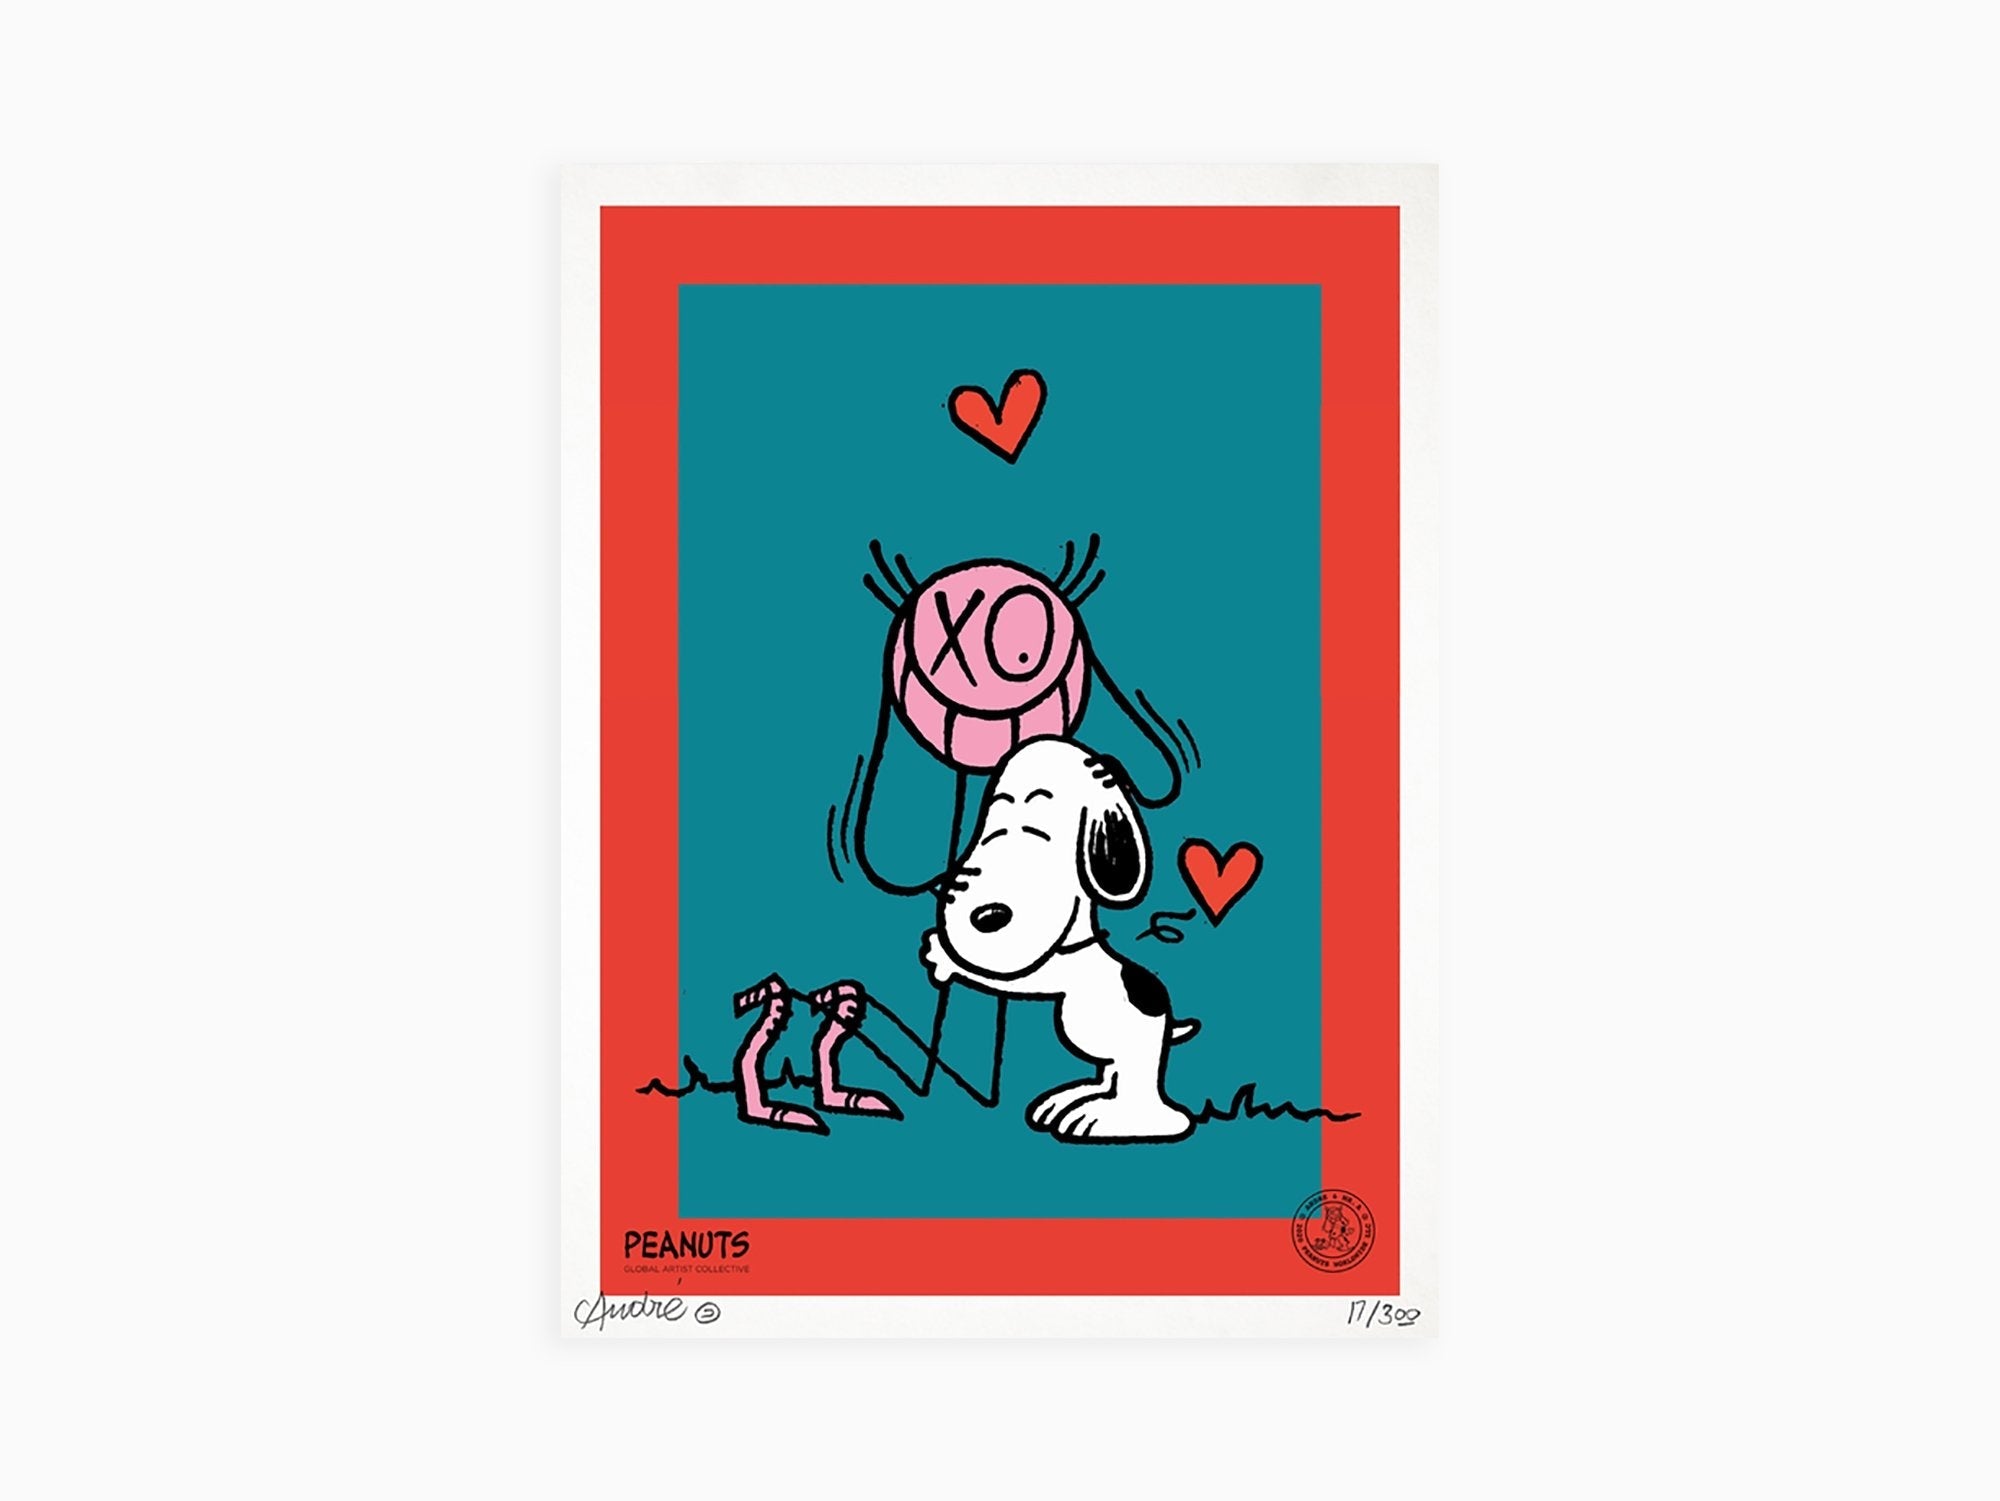 Mr. André - Mr. A loves Snoopy